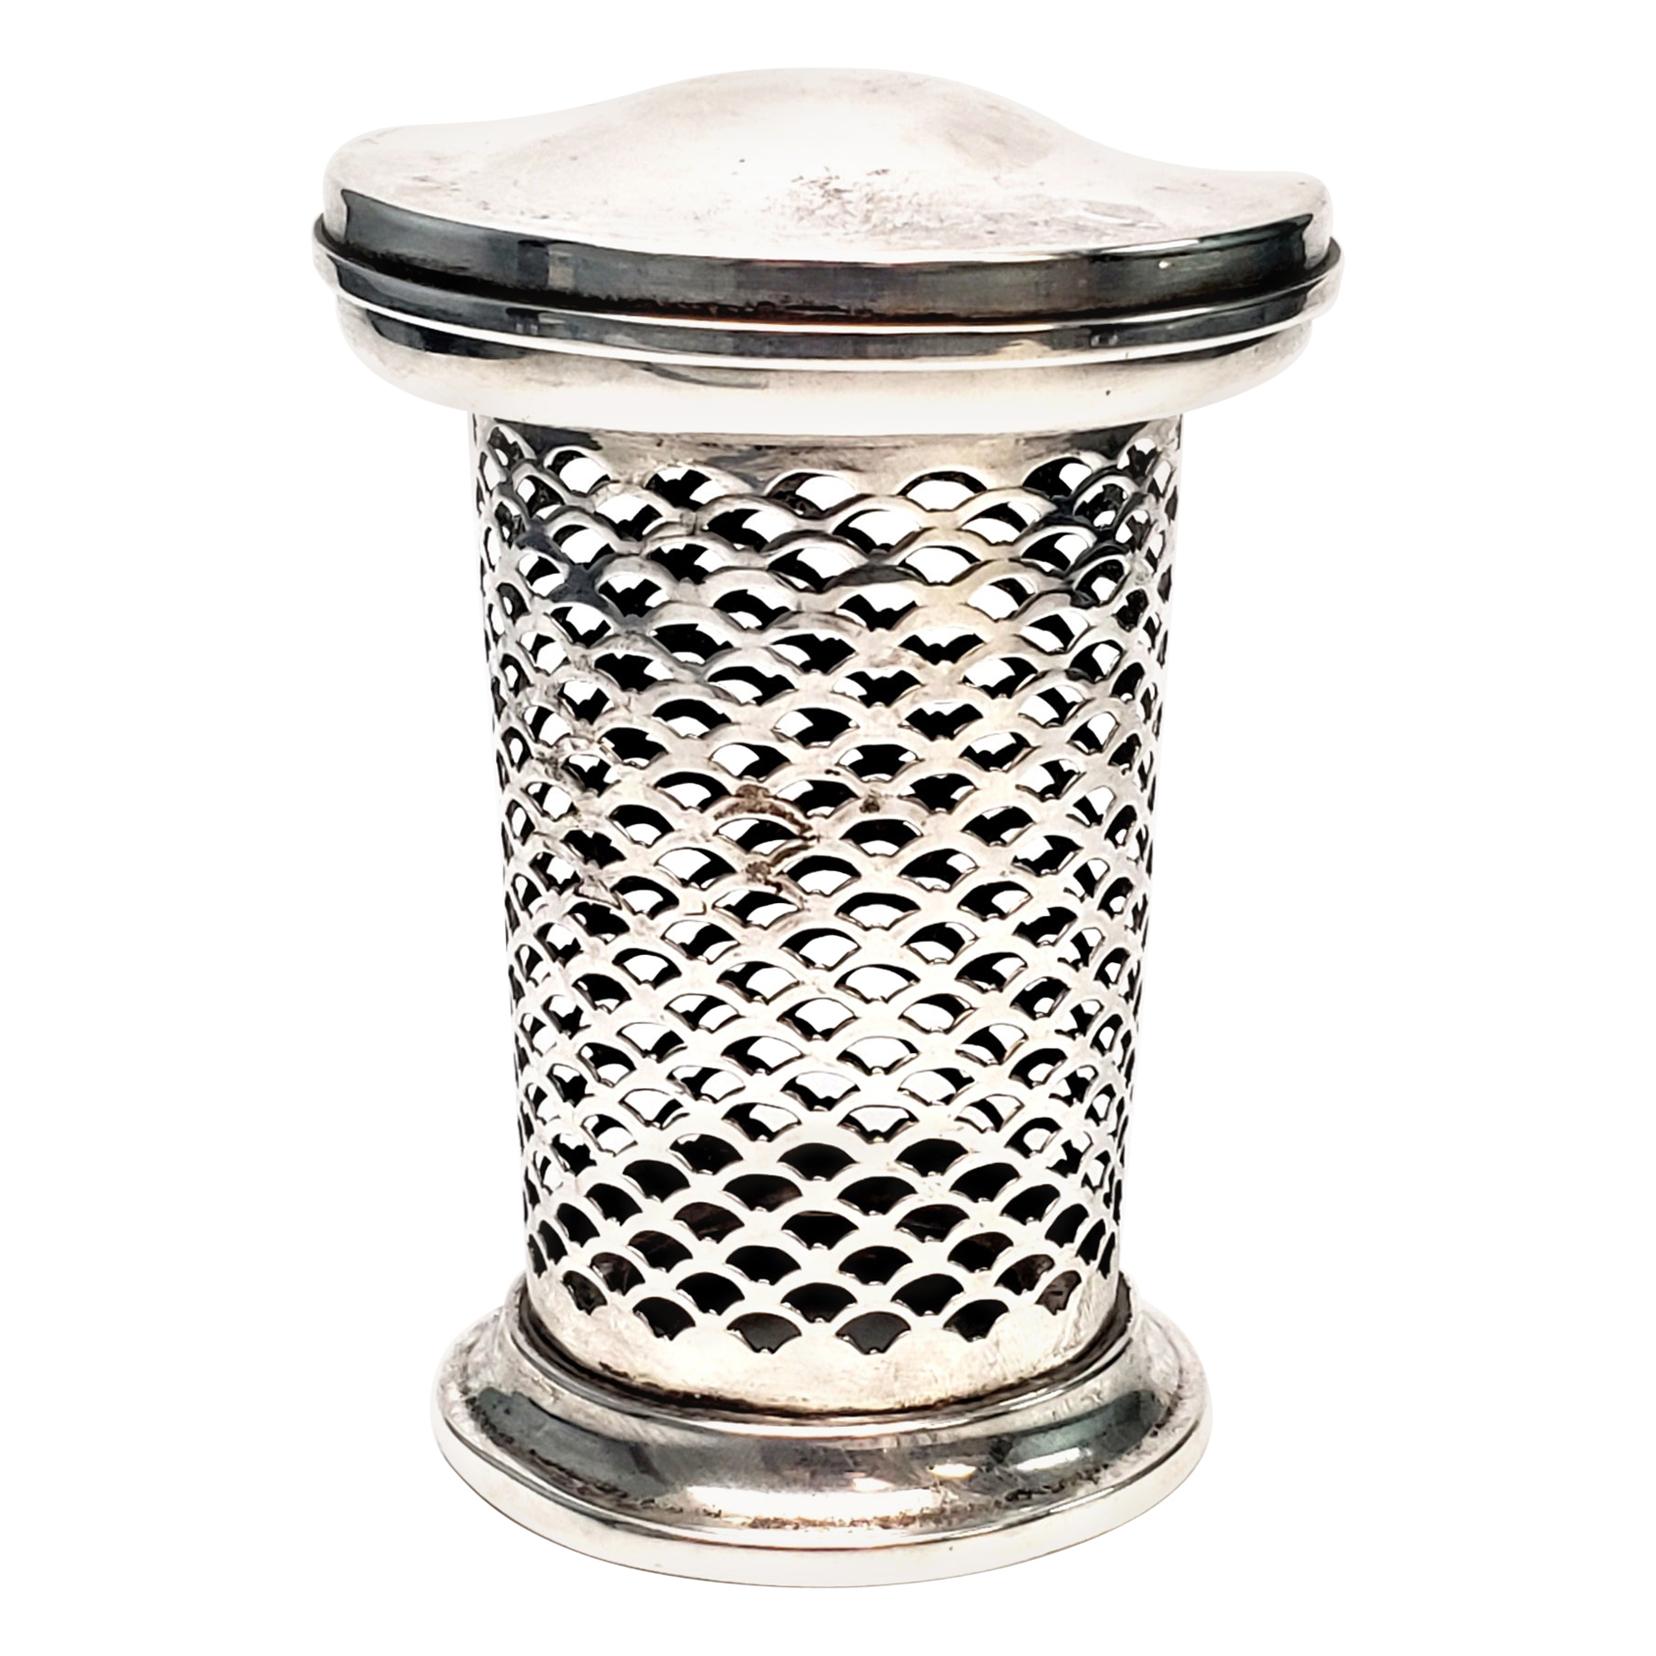 Meriden Brittania Co. Reticulated Sterling Silver Jar, No Insert